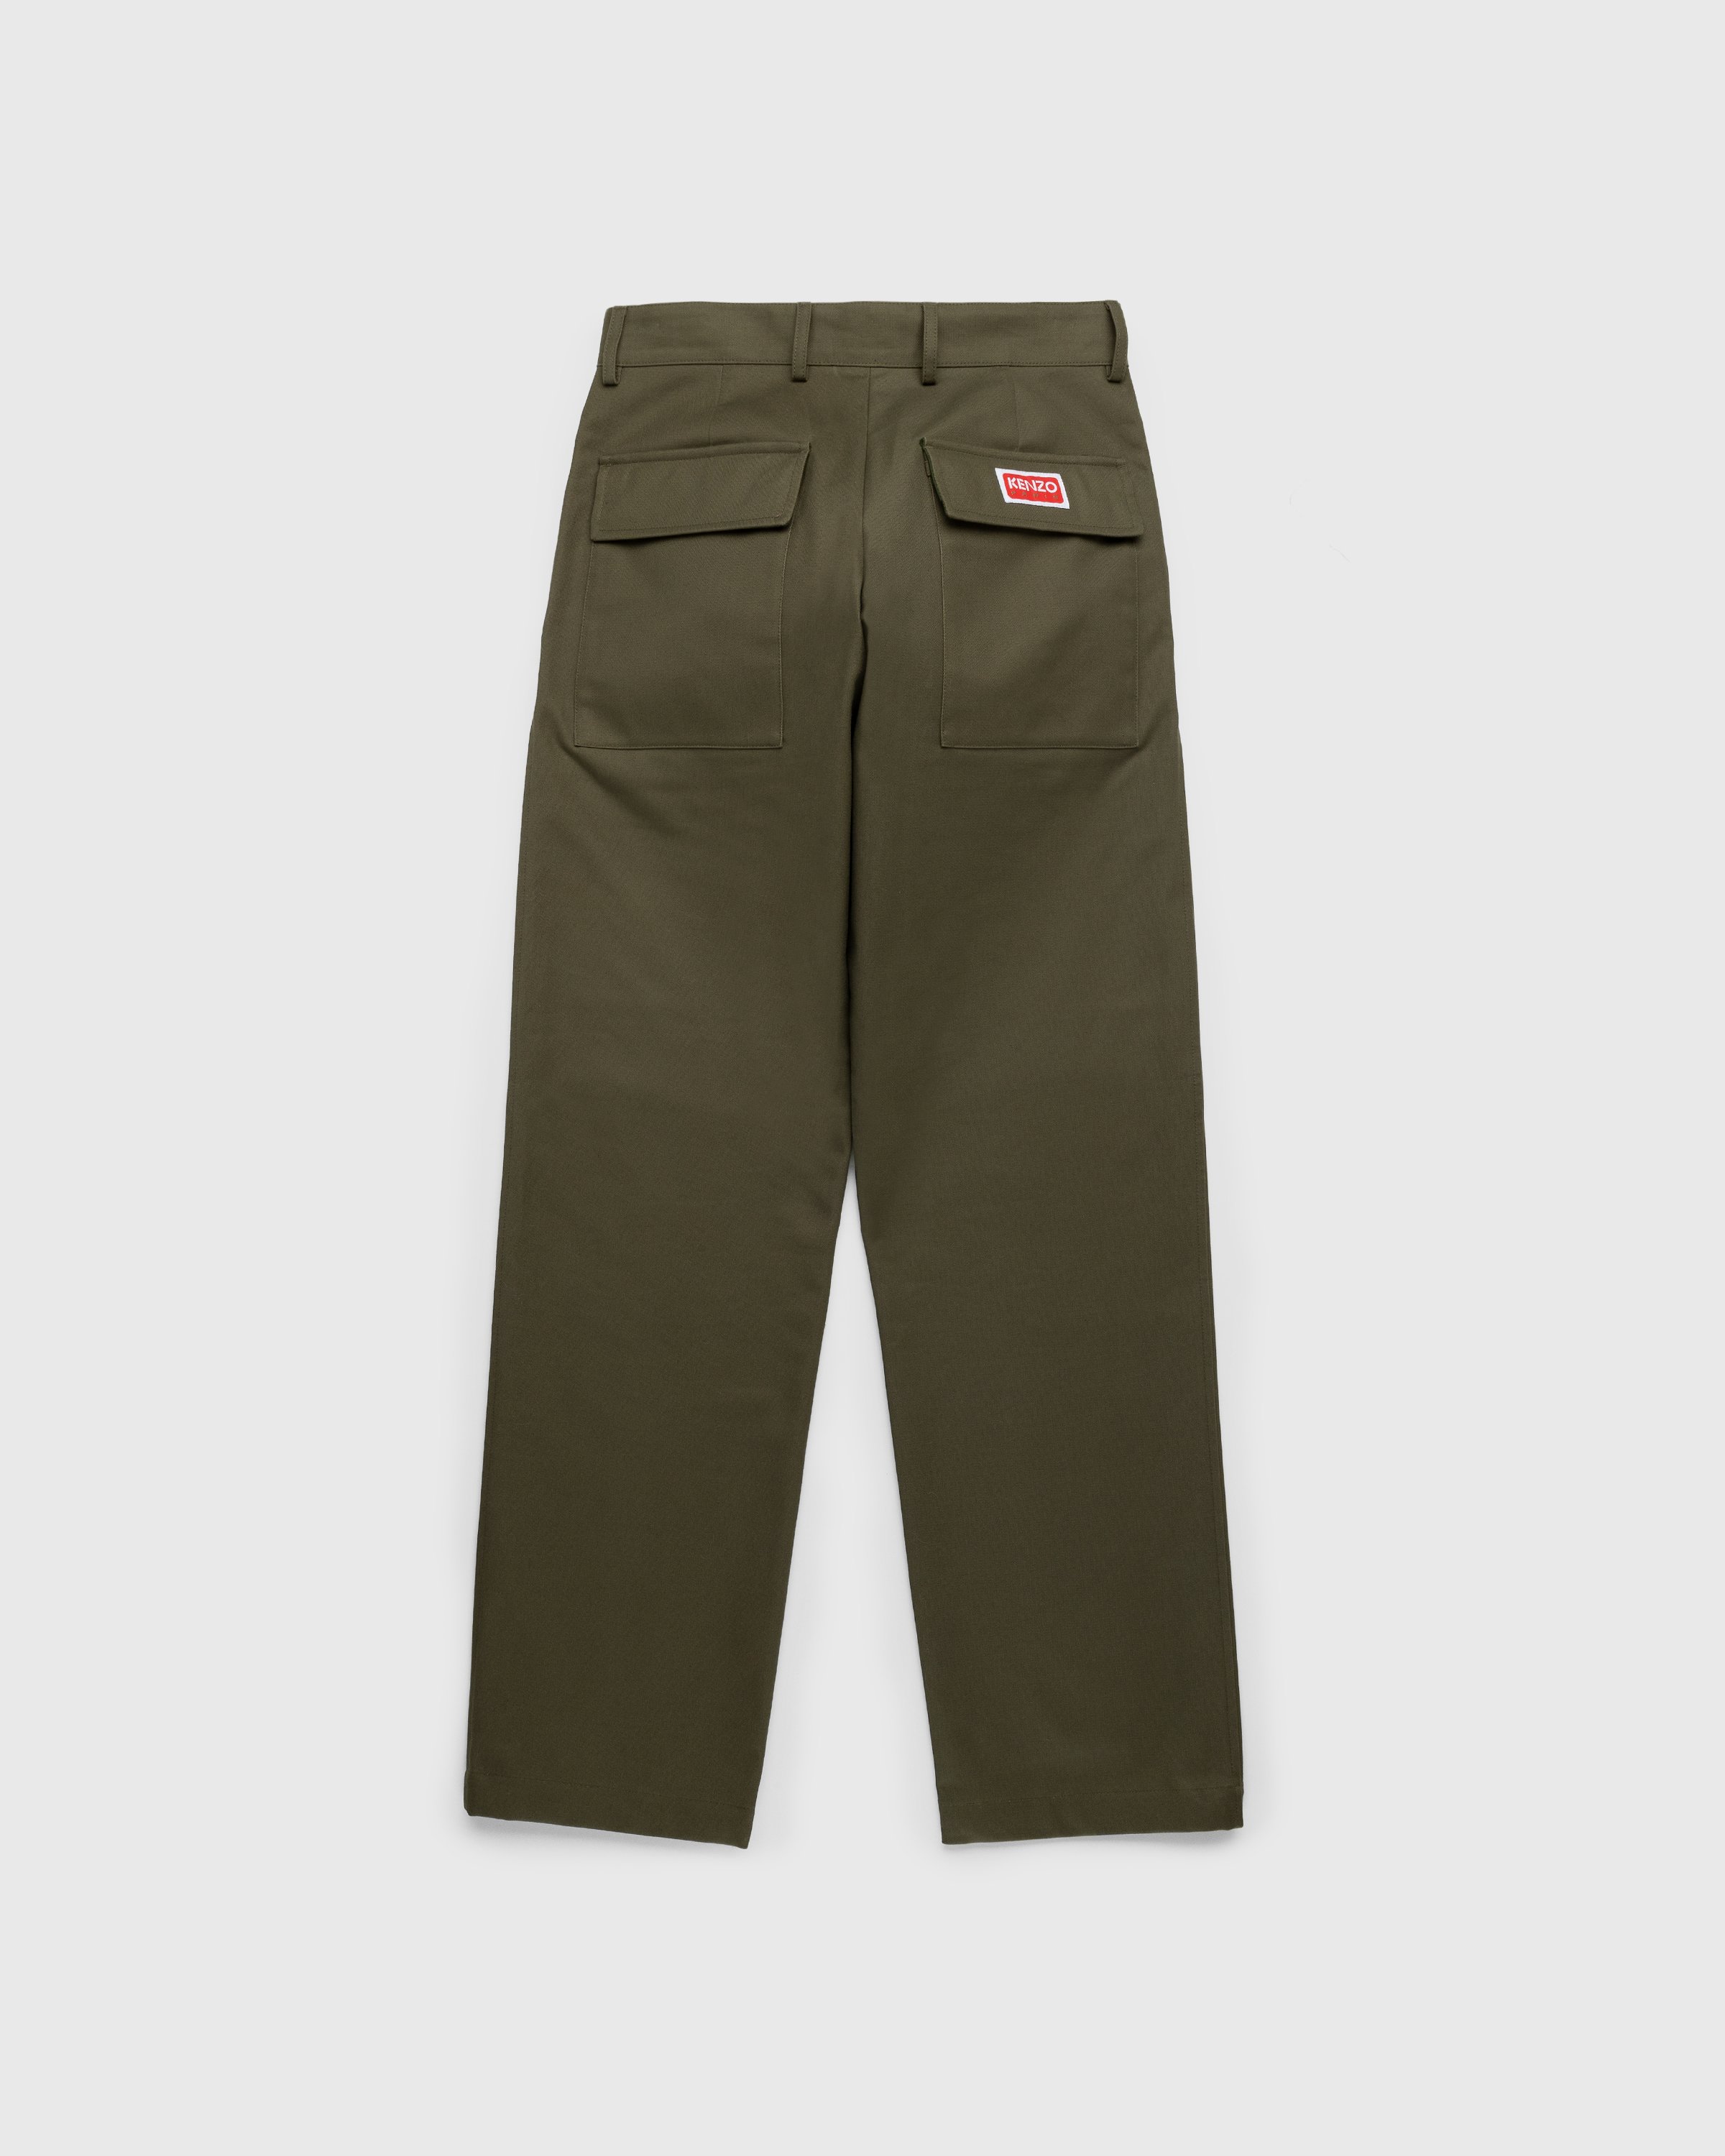 Kenzo - Tailored Pants Dark Khaki - Clothing - Green - Image 2